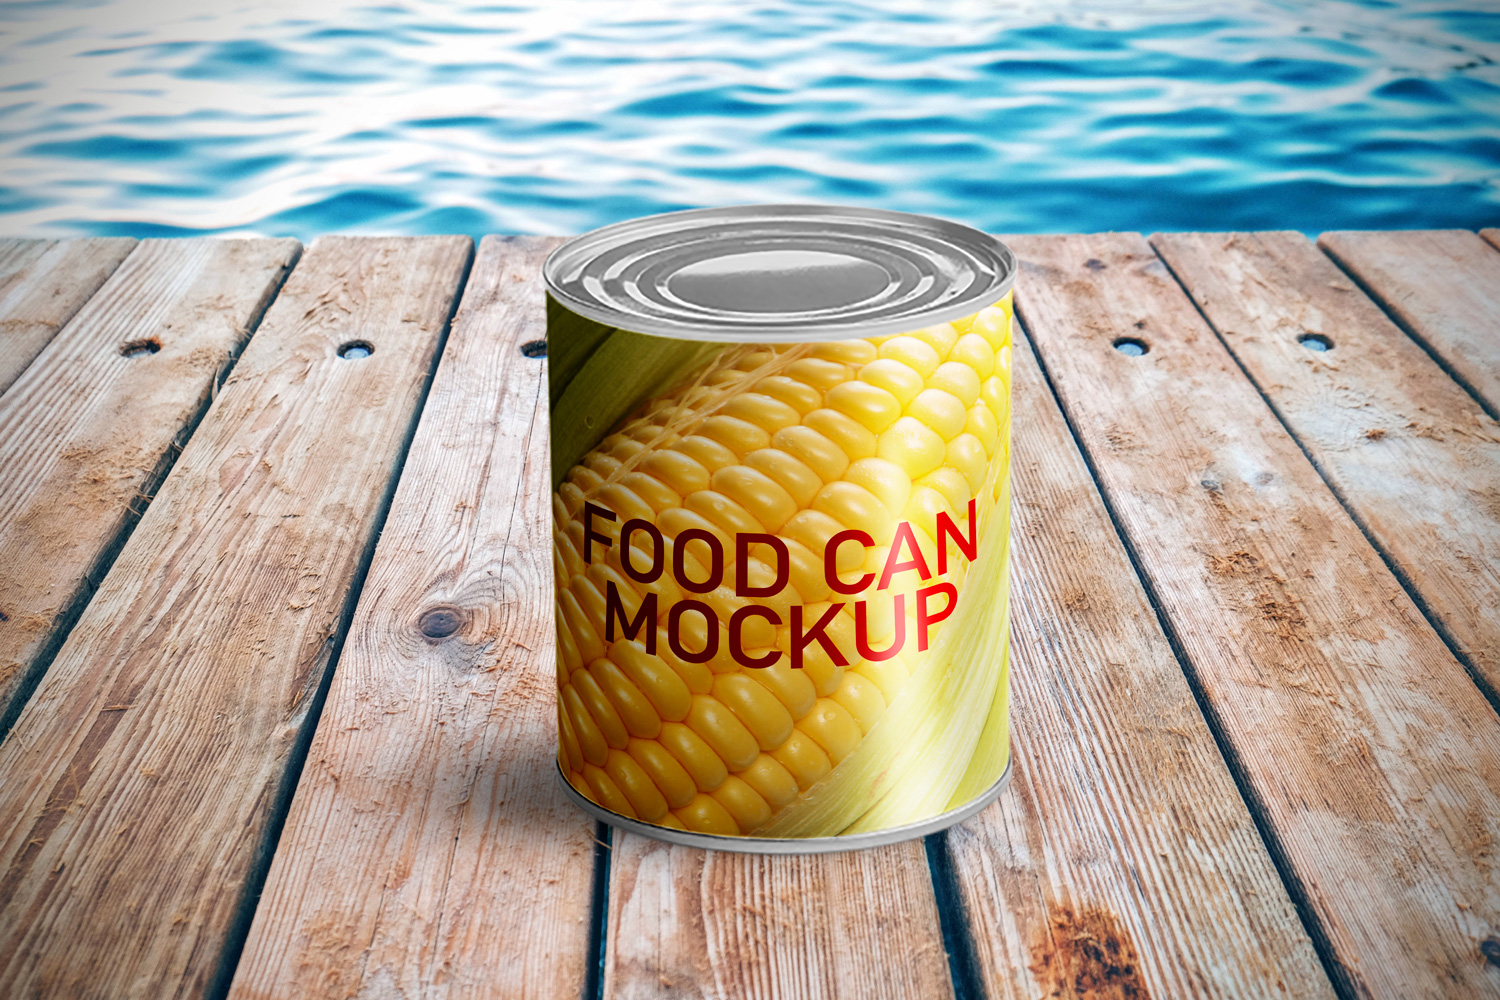 Download Food Can Mockup